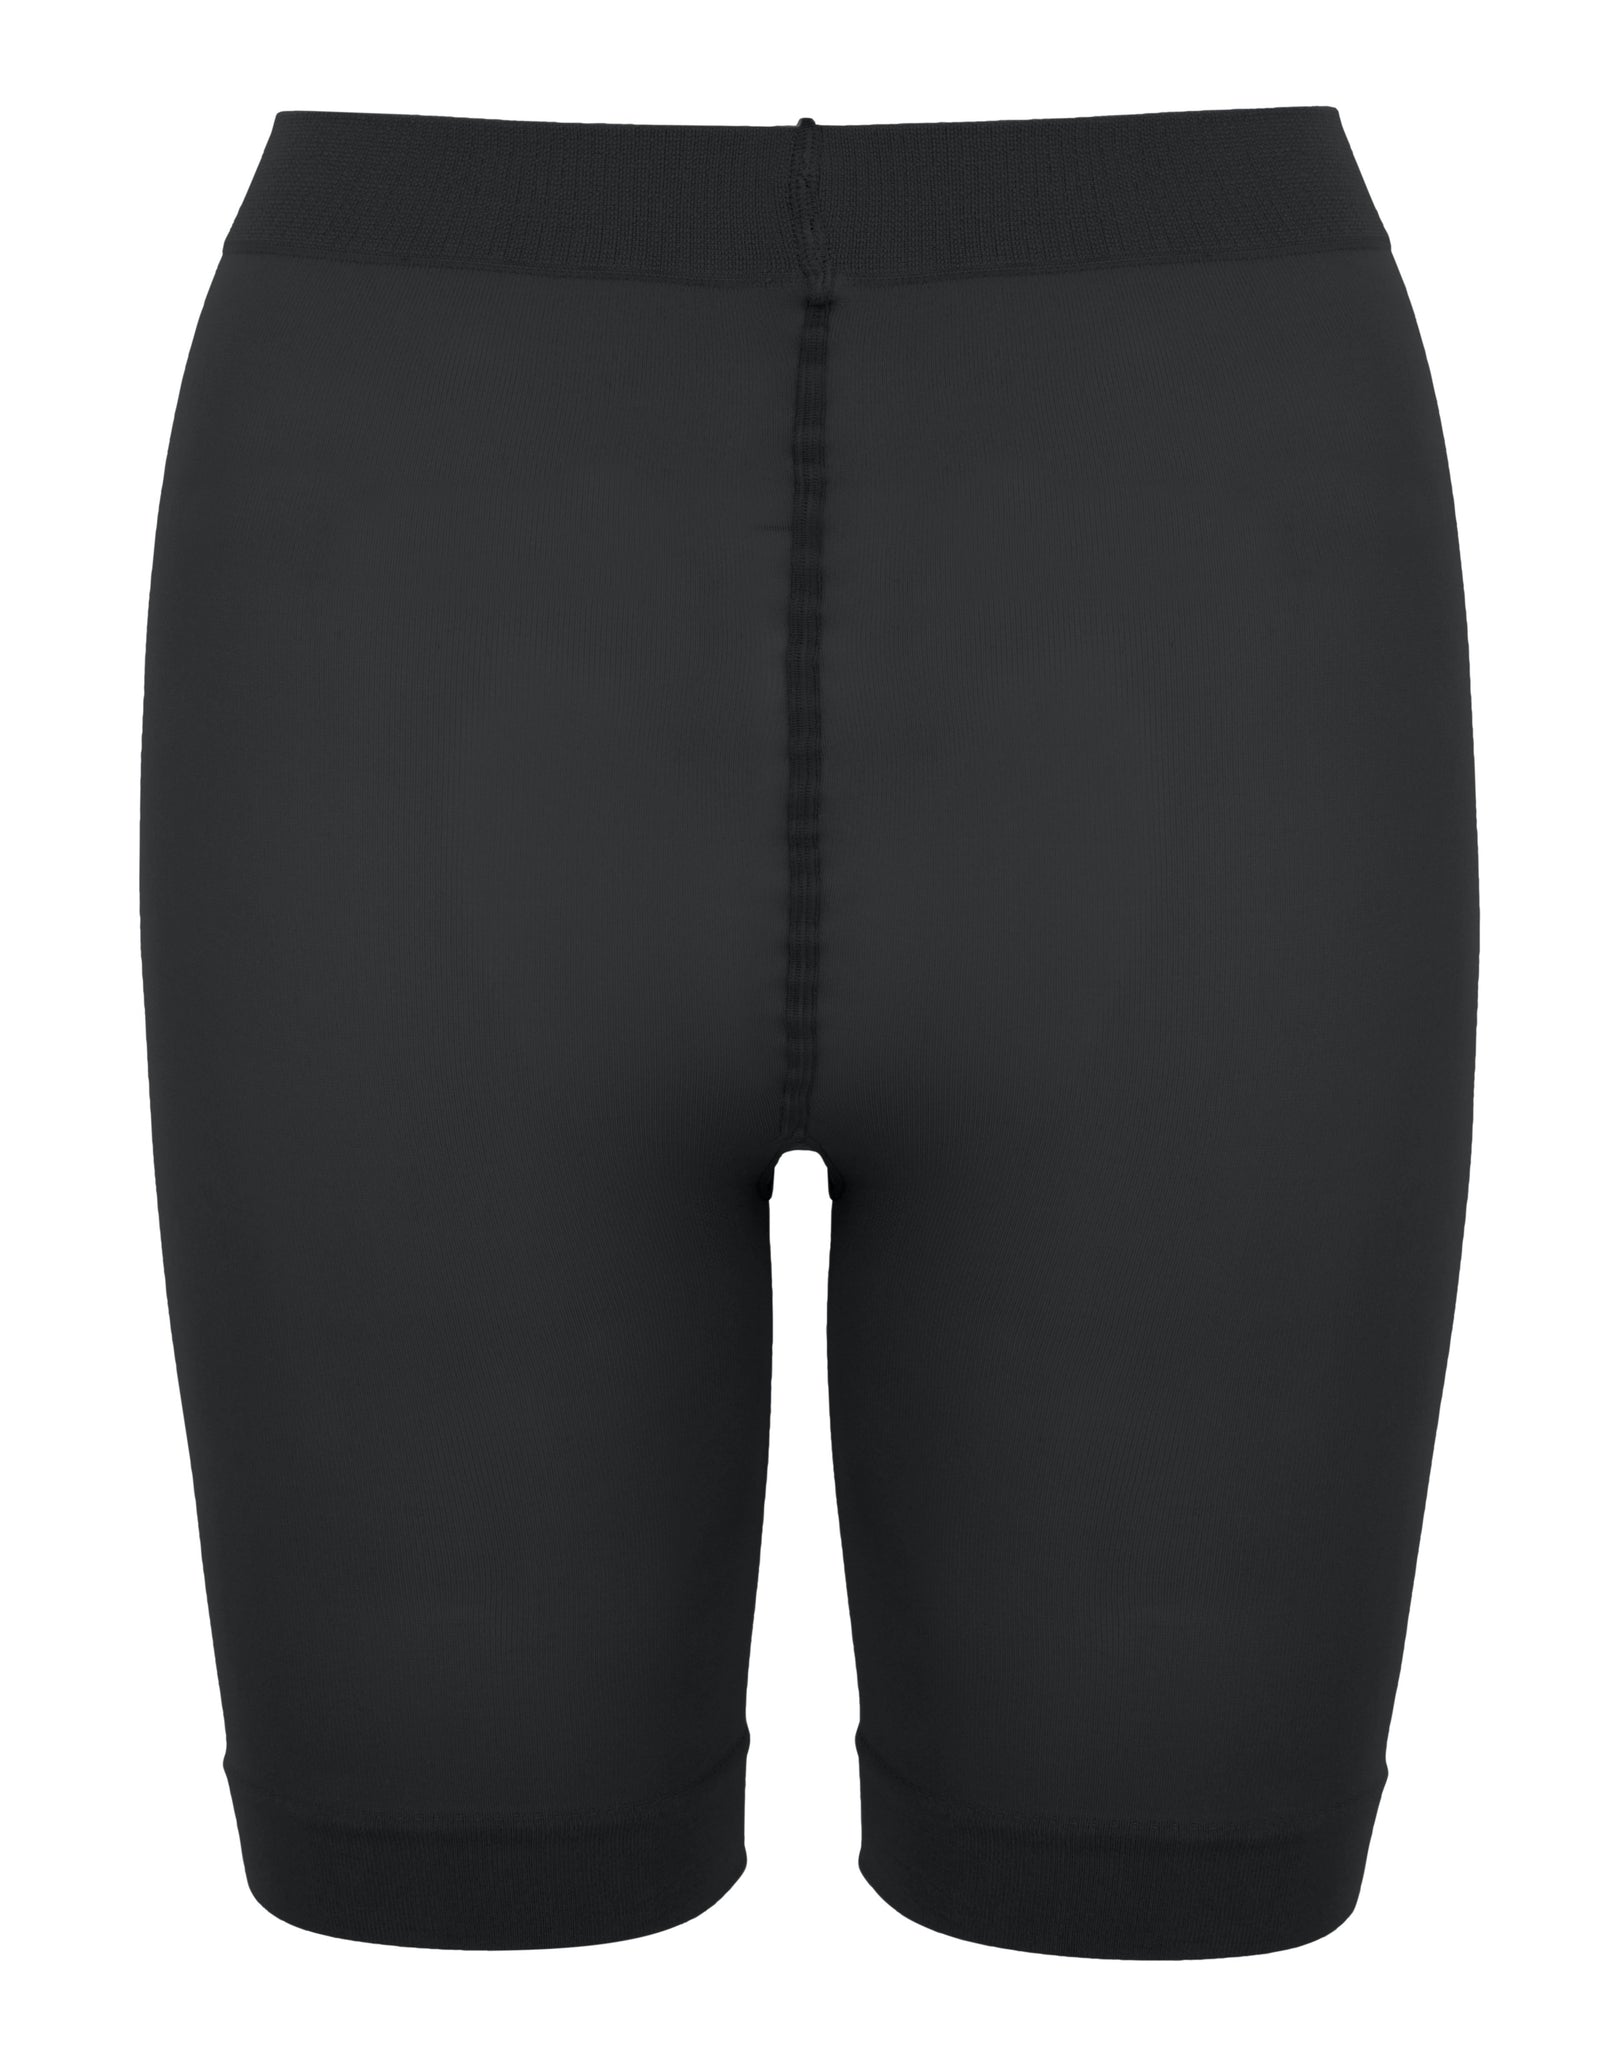 Bums n Tums Control Body Shorts Black - Ms. Shape